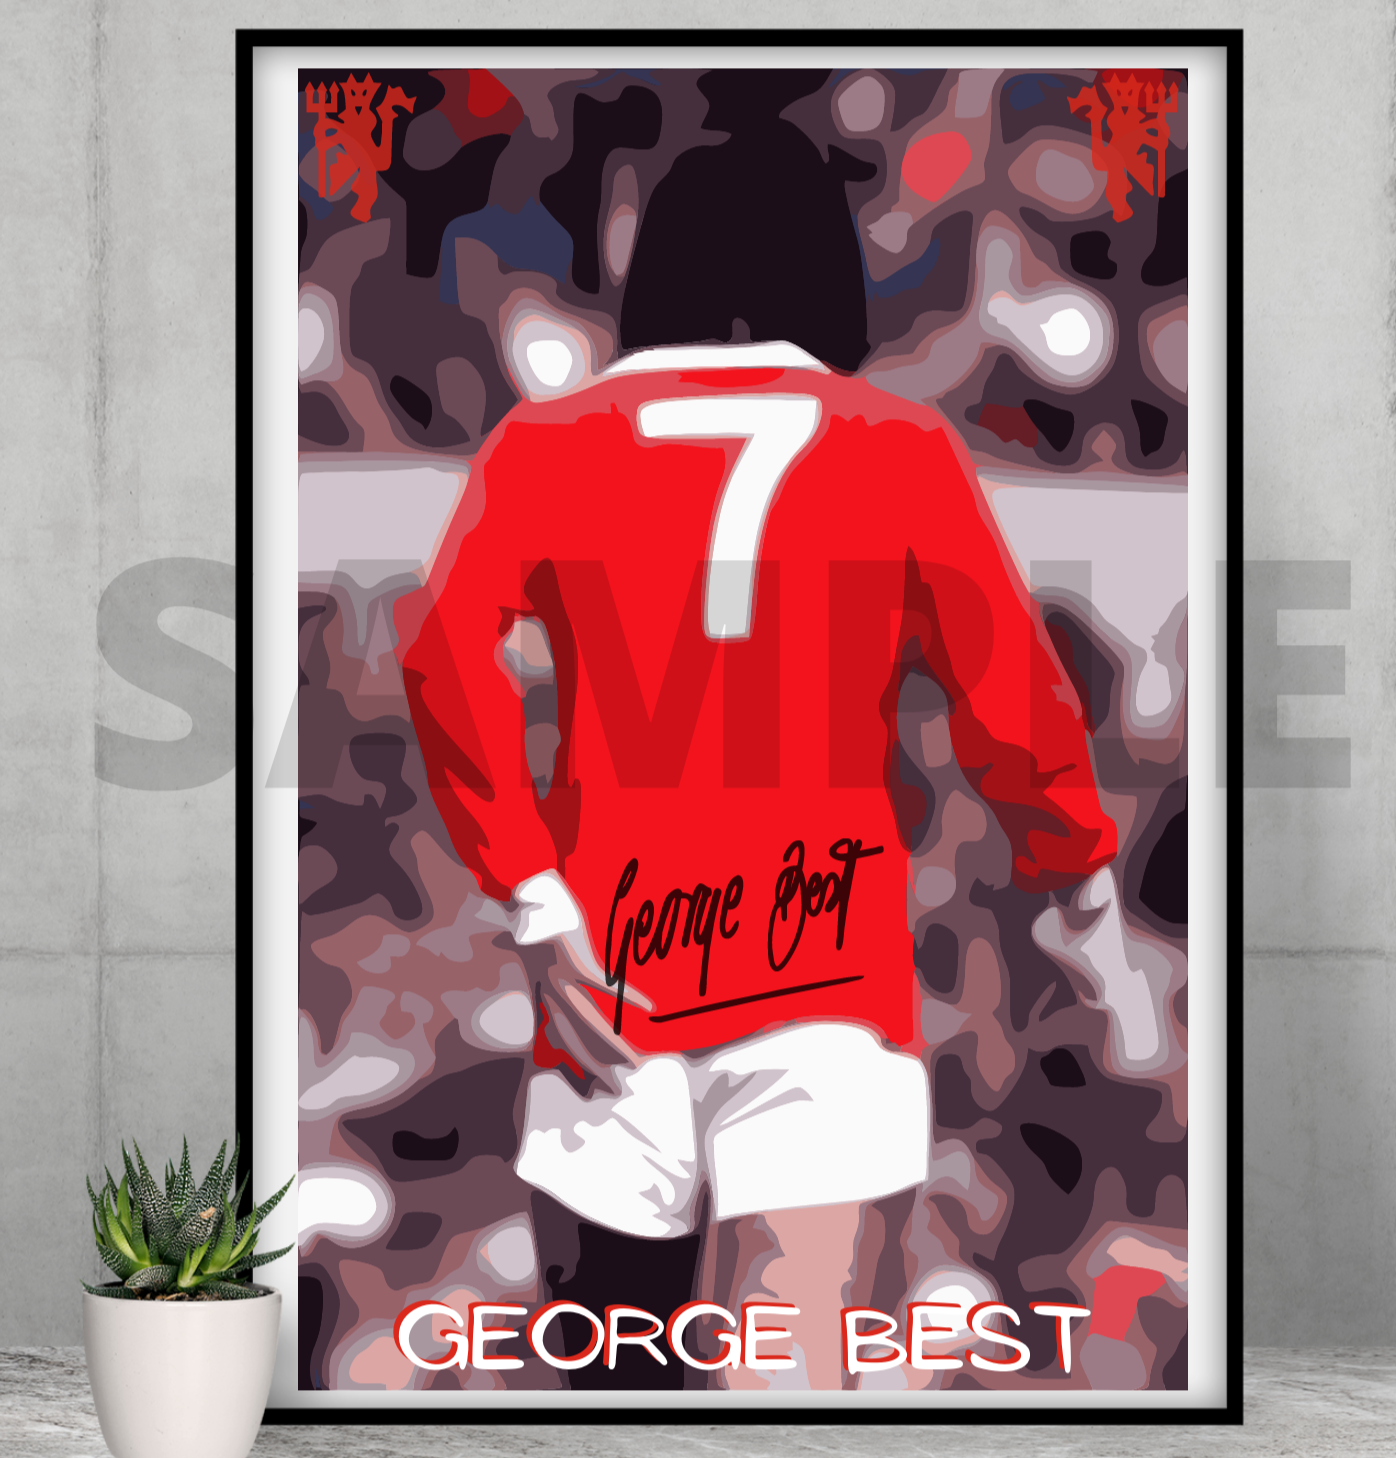 George Best (Man Utd)Football collectable/memorabilia/print